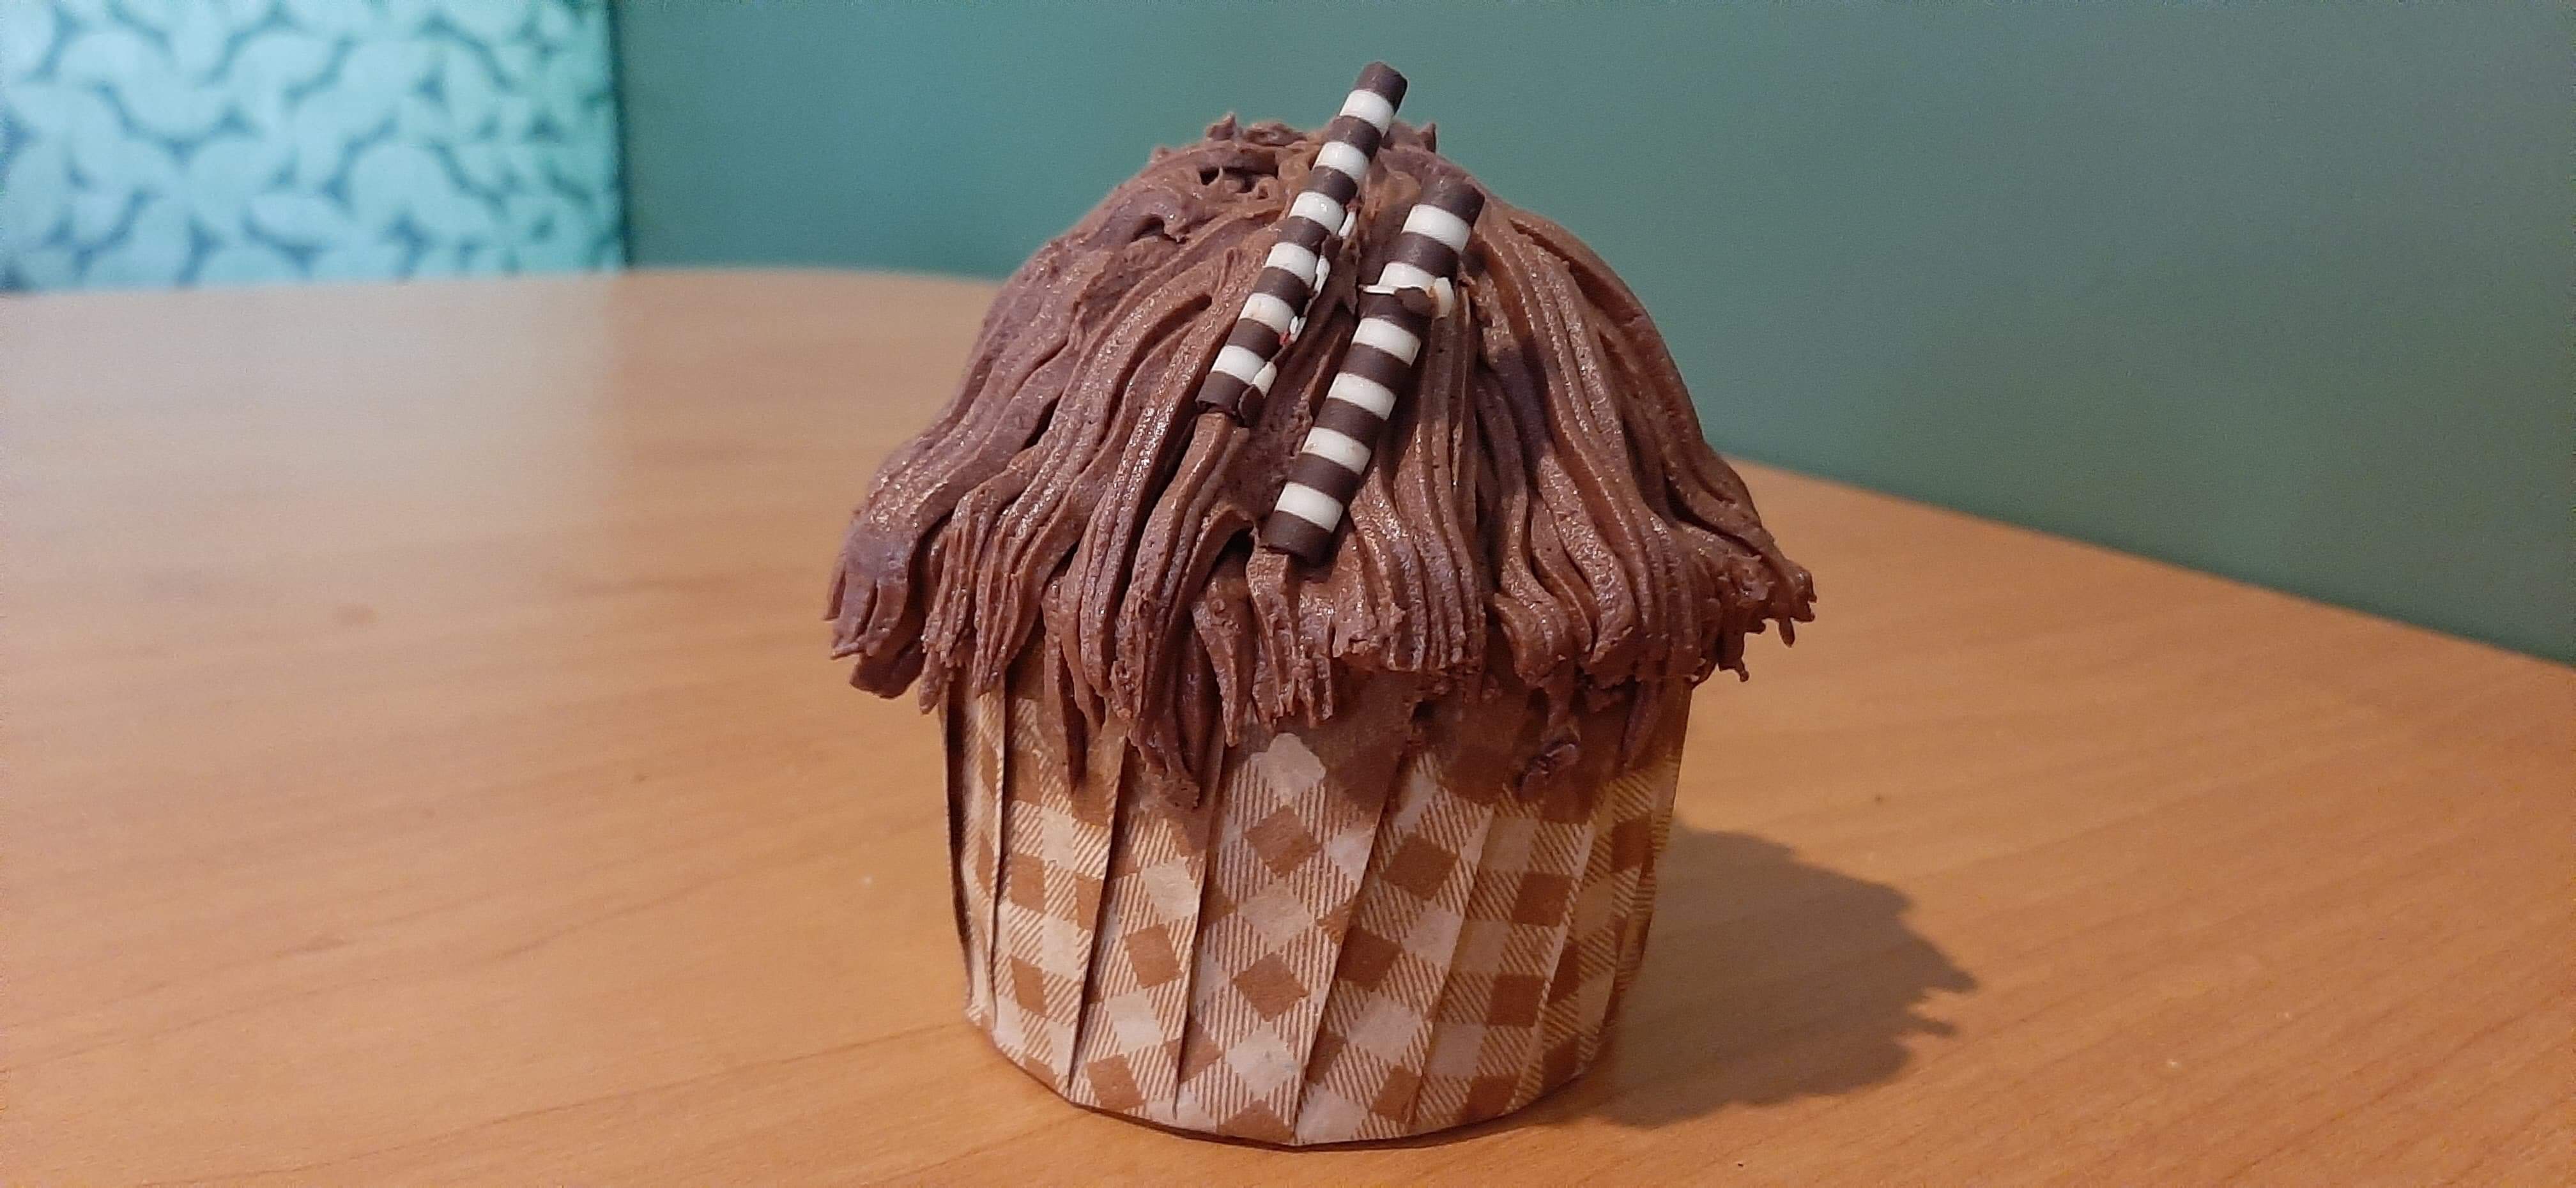 Chewbacca Cupcake Lands At The Art Of Animation Resort In Walt Disney World